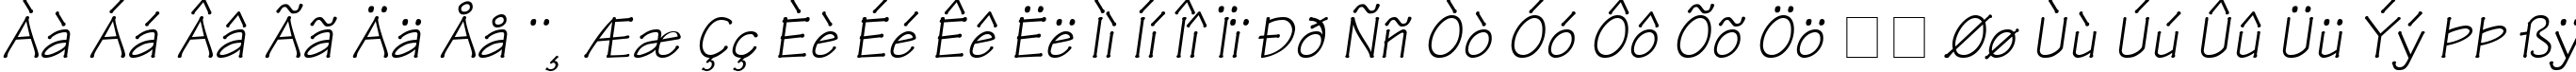 Пример написания русского алфавита шрифтом Technical Italic